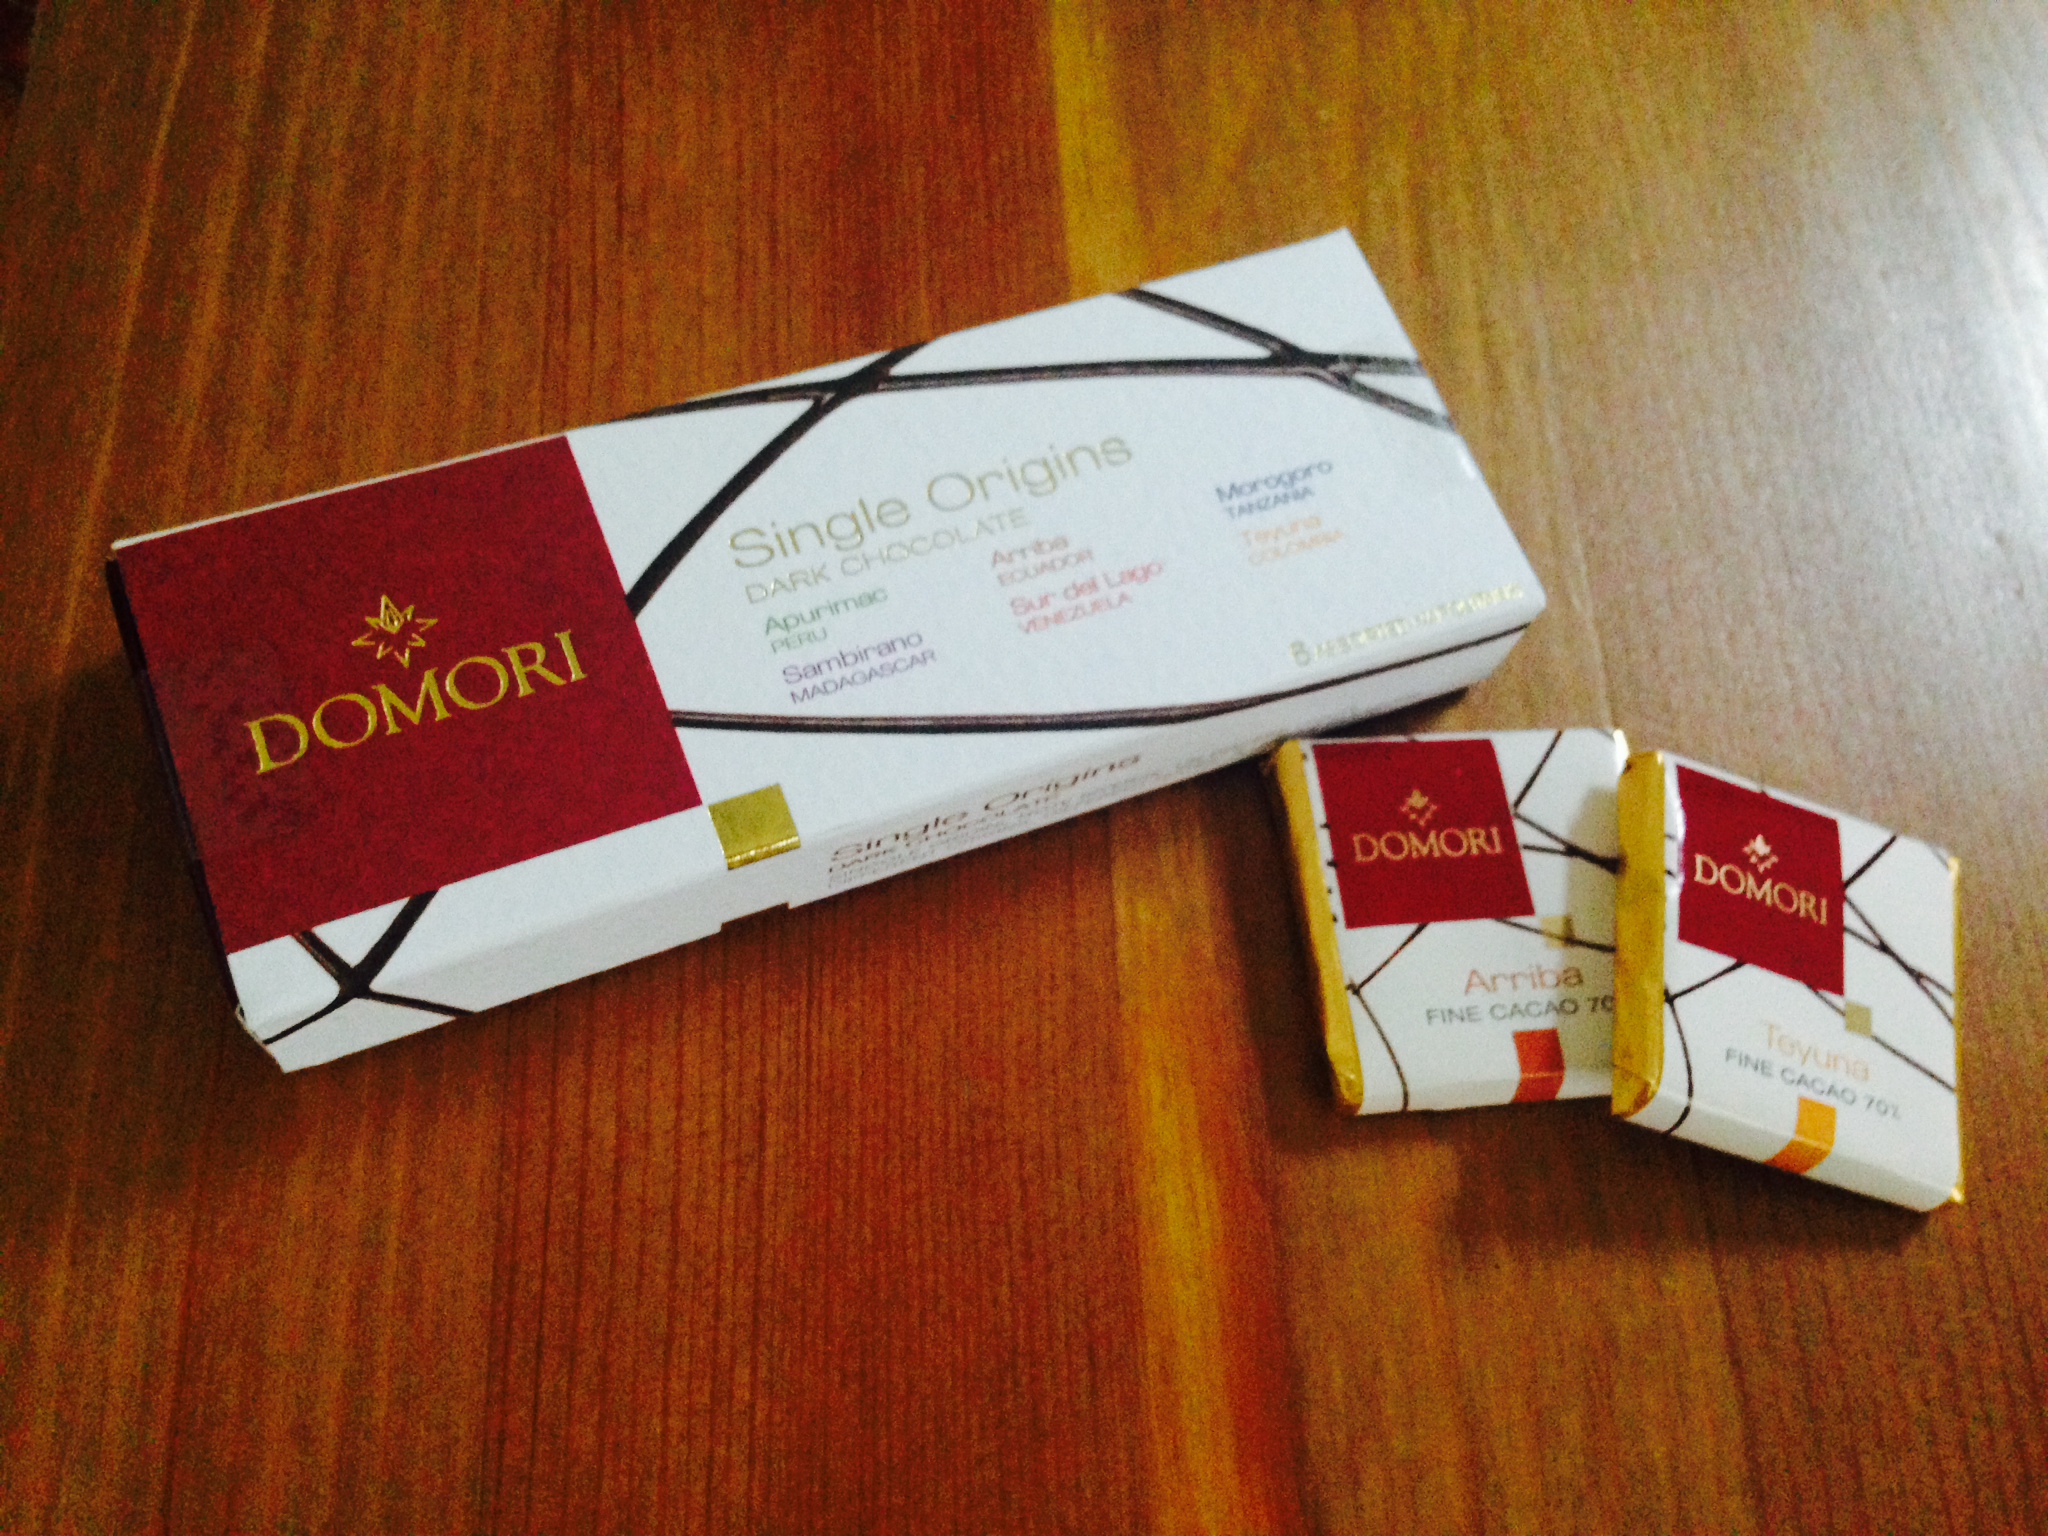 DOMORIの産地別シングルオリジンチョコレート